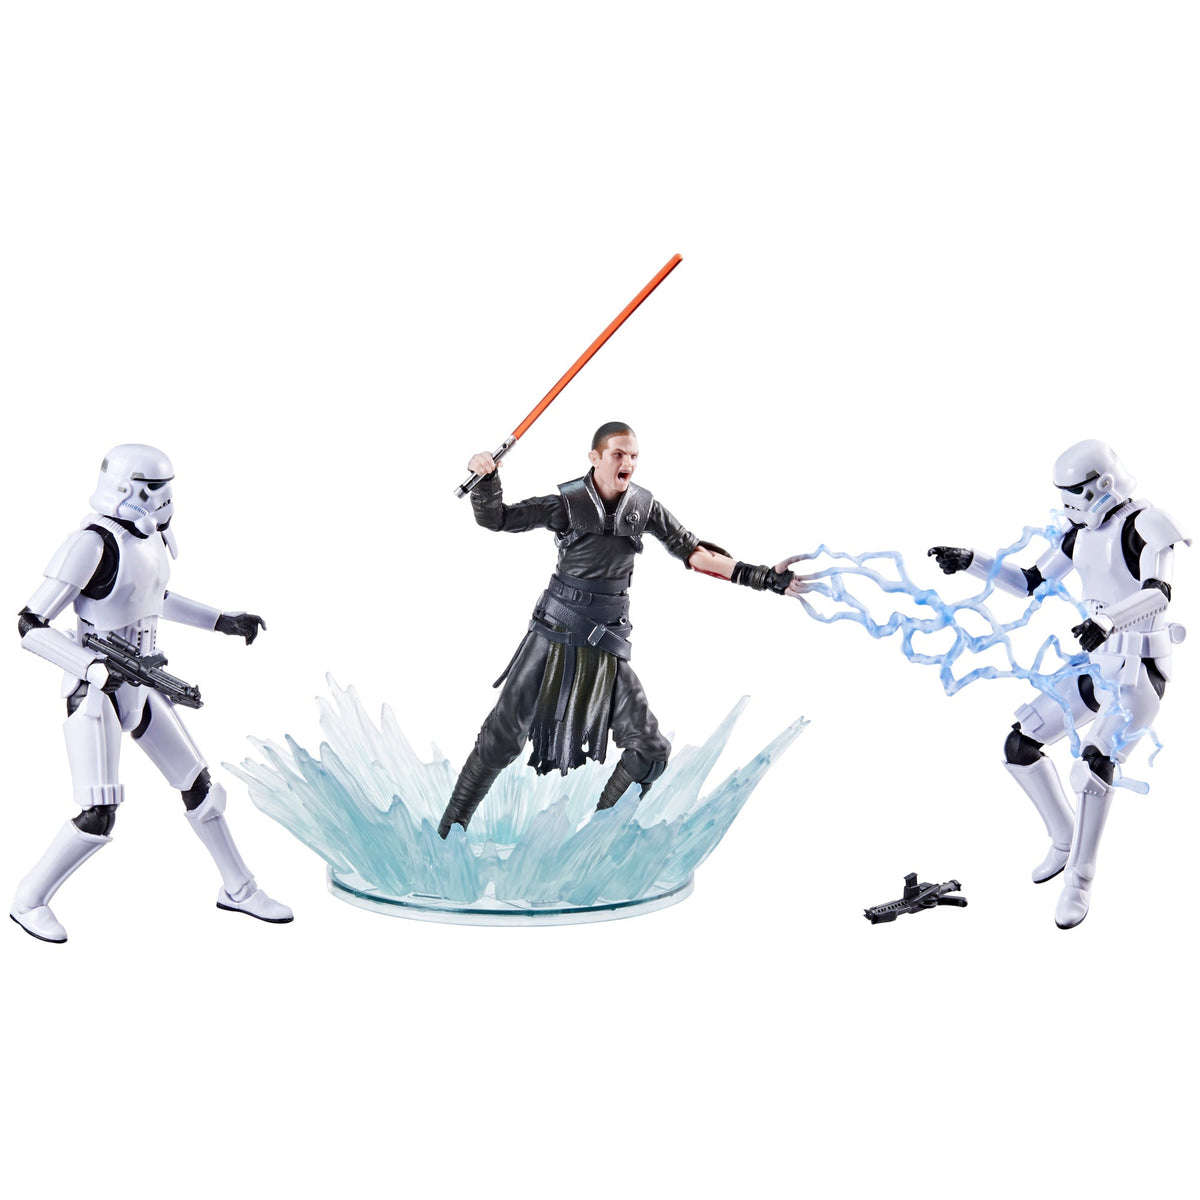 Star Wars The Black Series Starkiller & Troopers Figures – Hasbro